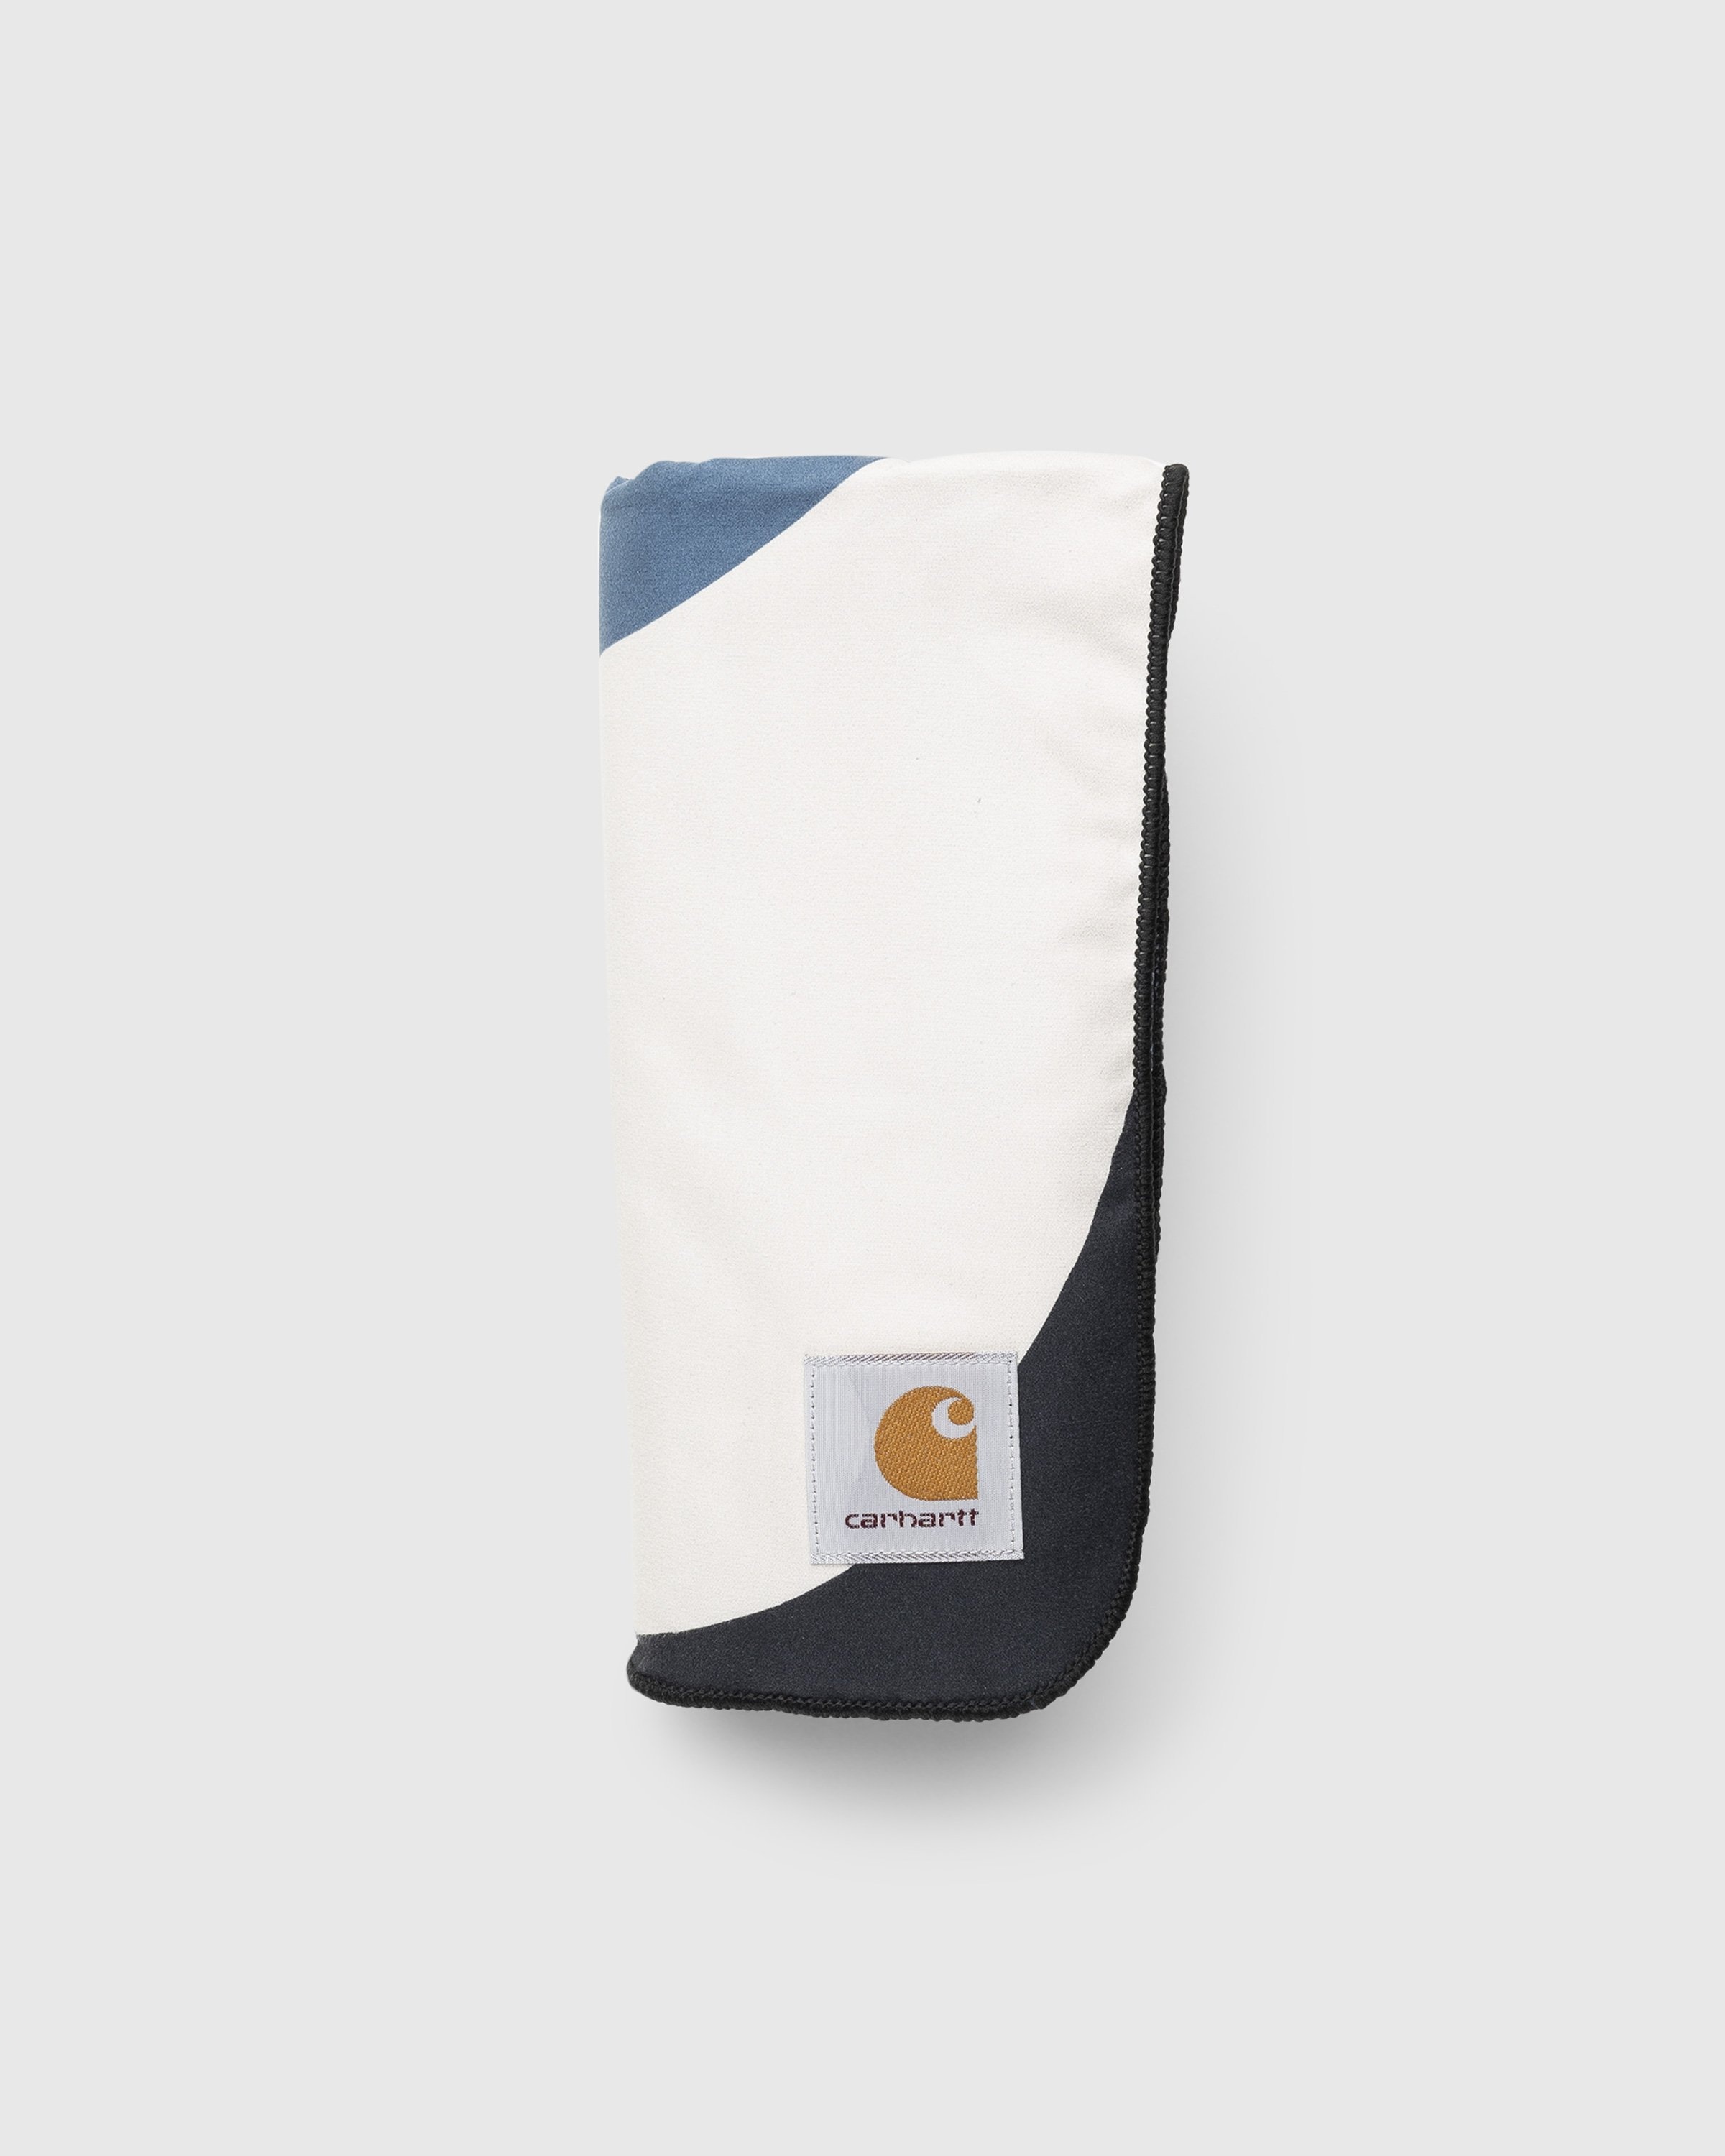 Carhartt WIP – Tamas Packable Towel Multi - Towels - Multi - Image 3